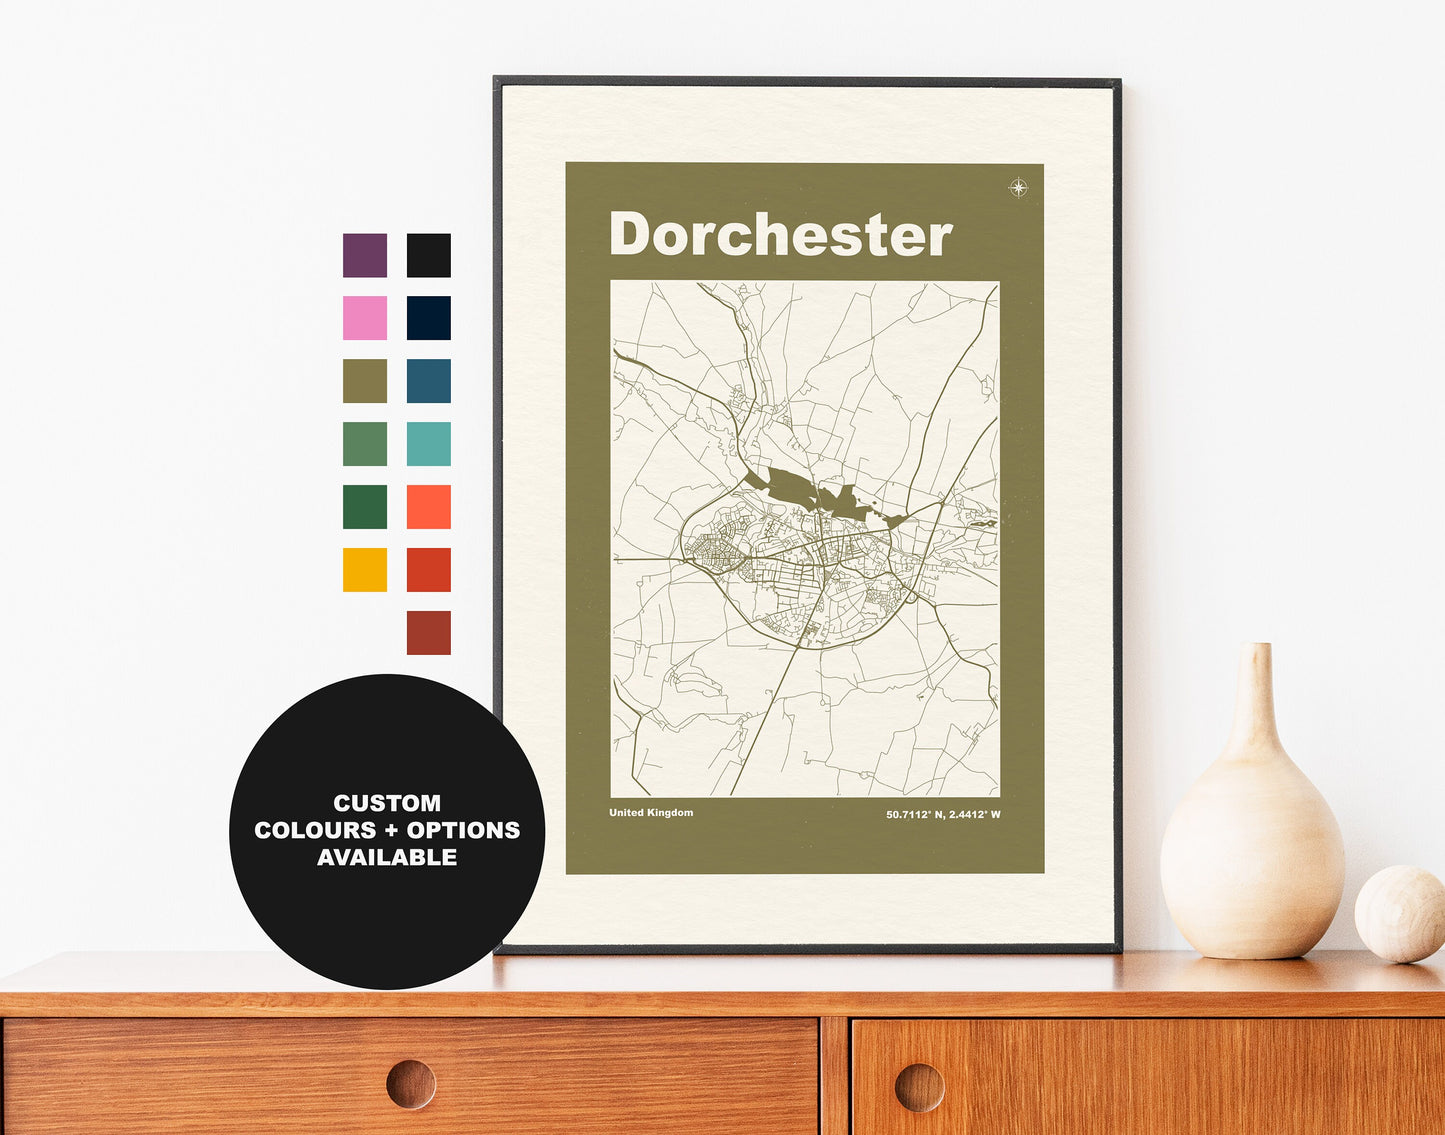 Dorchester Print - Map Print - Mid Century Modern  - Retro - Vintage - Contemporary - Dorchester Print - Map - Map Poster - Gift - Dorset